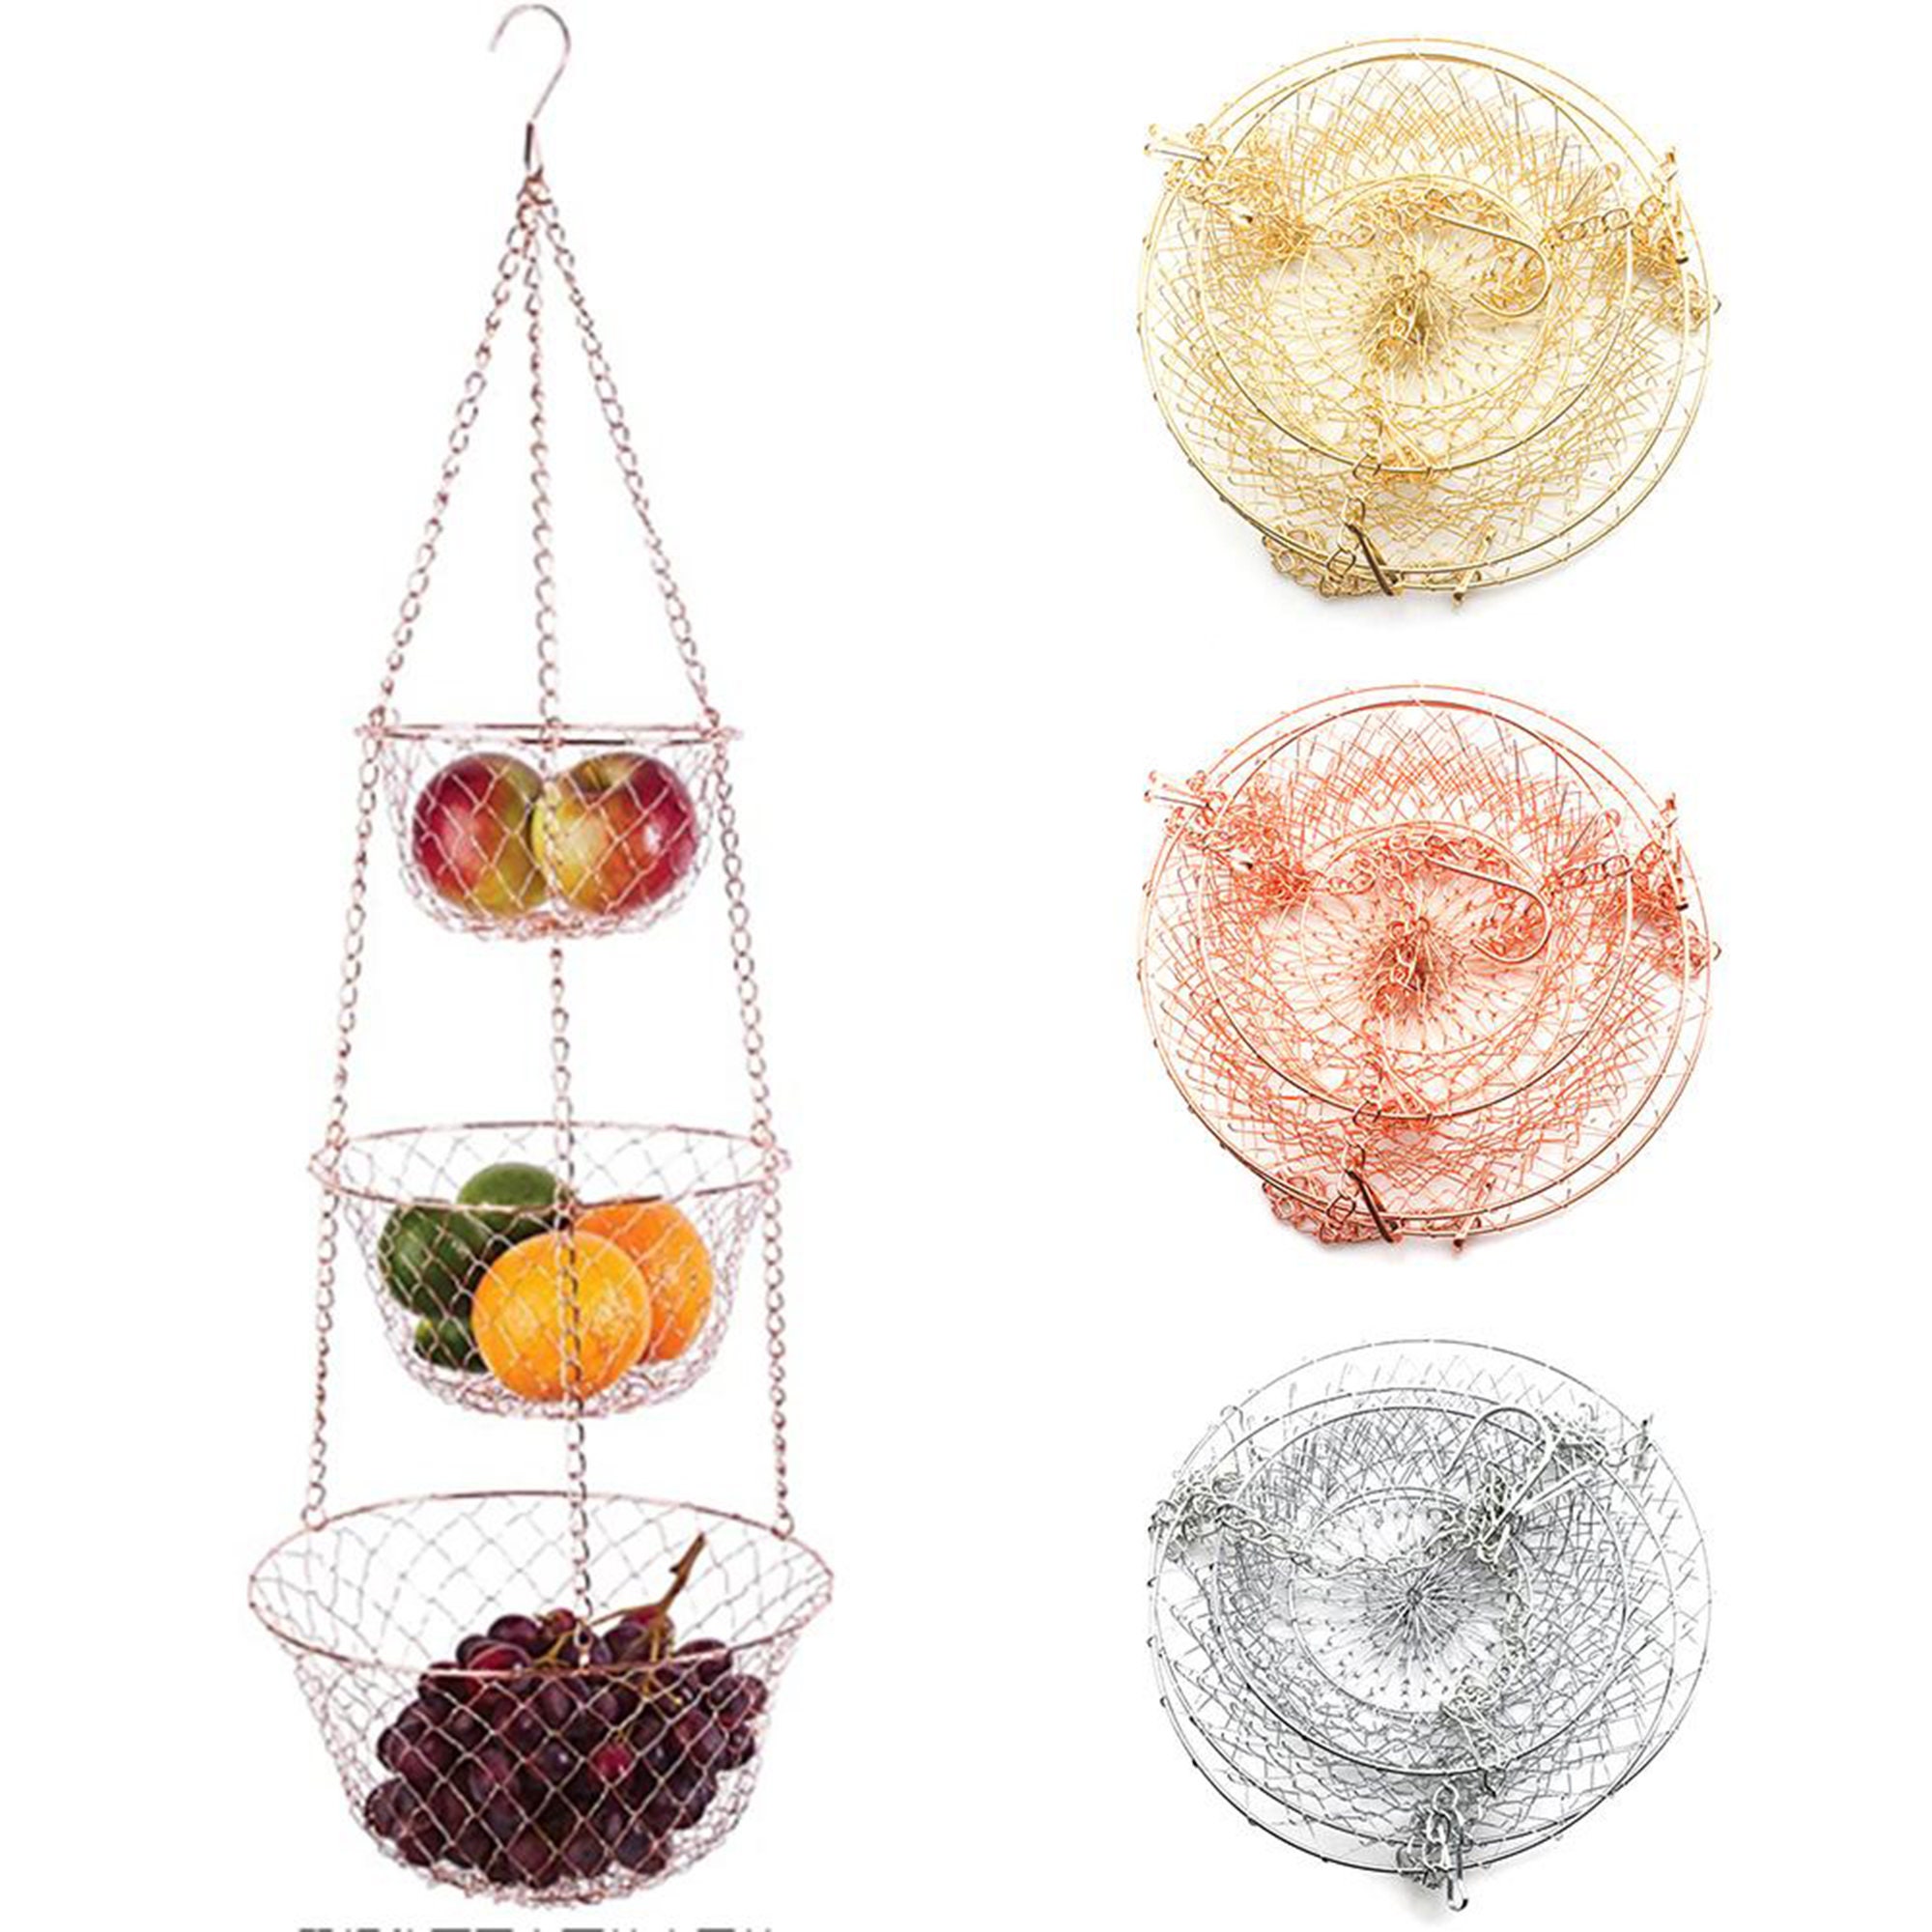 3-Tier Fruit Basket Hanging Baskets for Storage Kitchen Tool Bathroom Organizer 